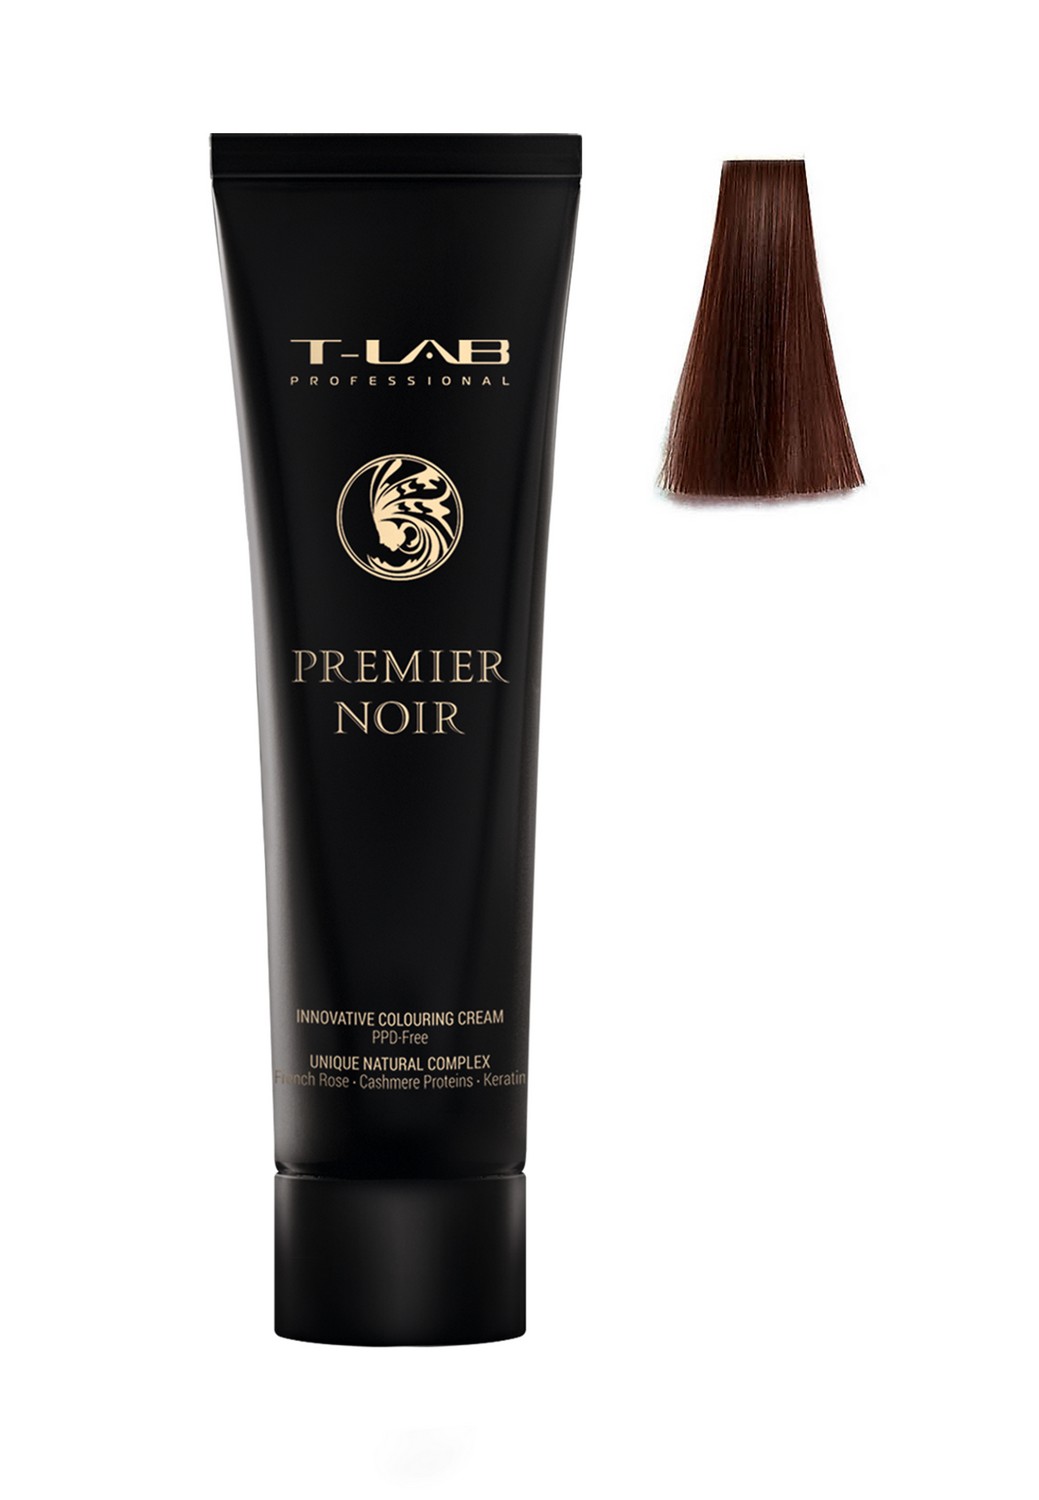 Крем-краска T-LAB Professional Premier Noir colouring cream, оттенок 6.34 (dark golden copper blonde) - фото 2